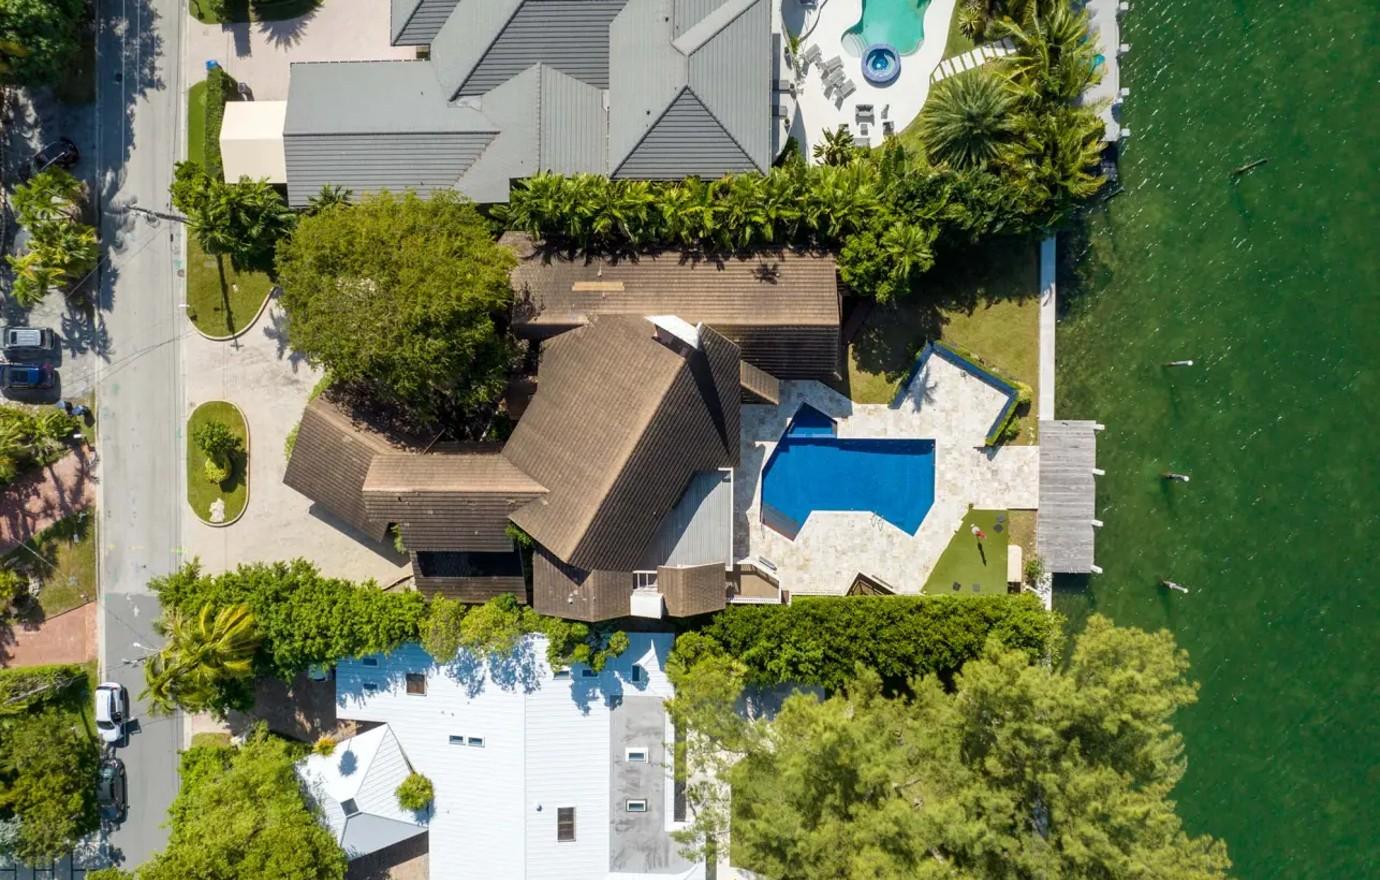 Gisele Bundchen Buys $11.5 Million Florida Mansion Opposite Tom Brady